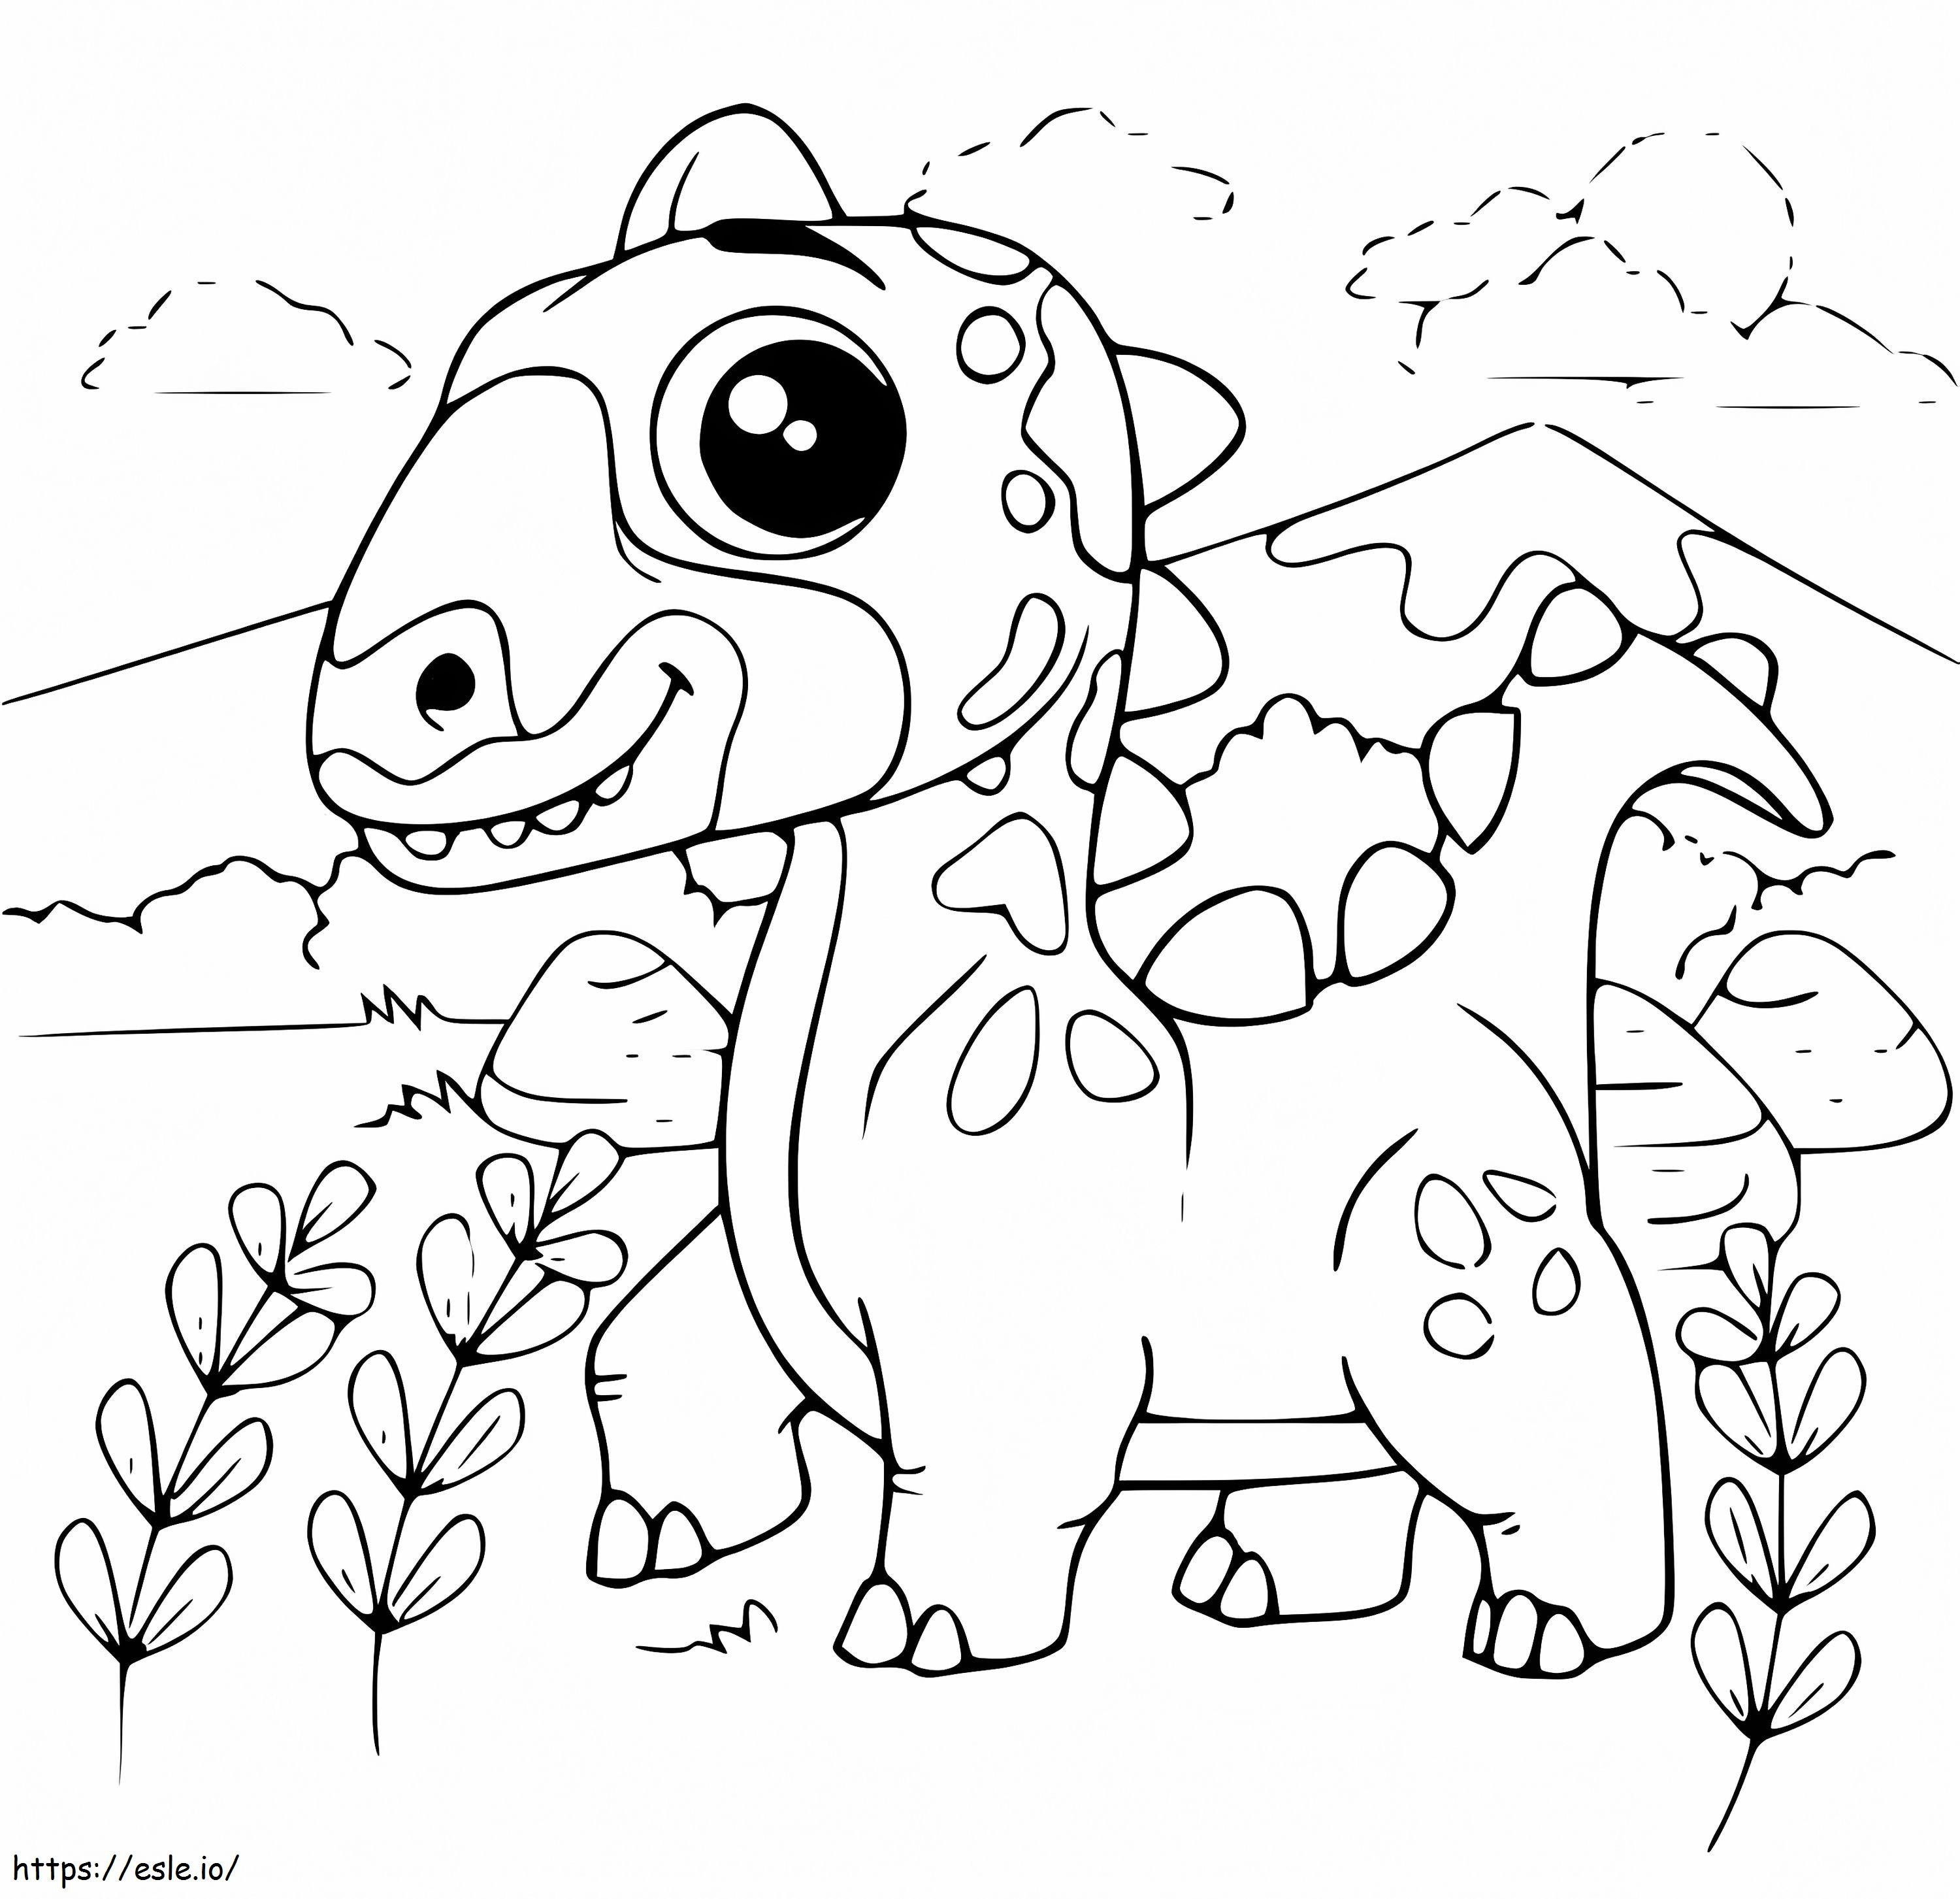 Cute Dinosaur coloring page